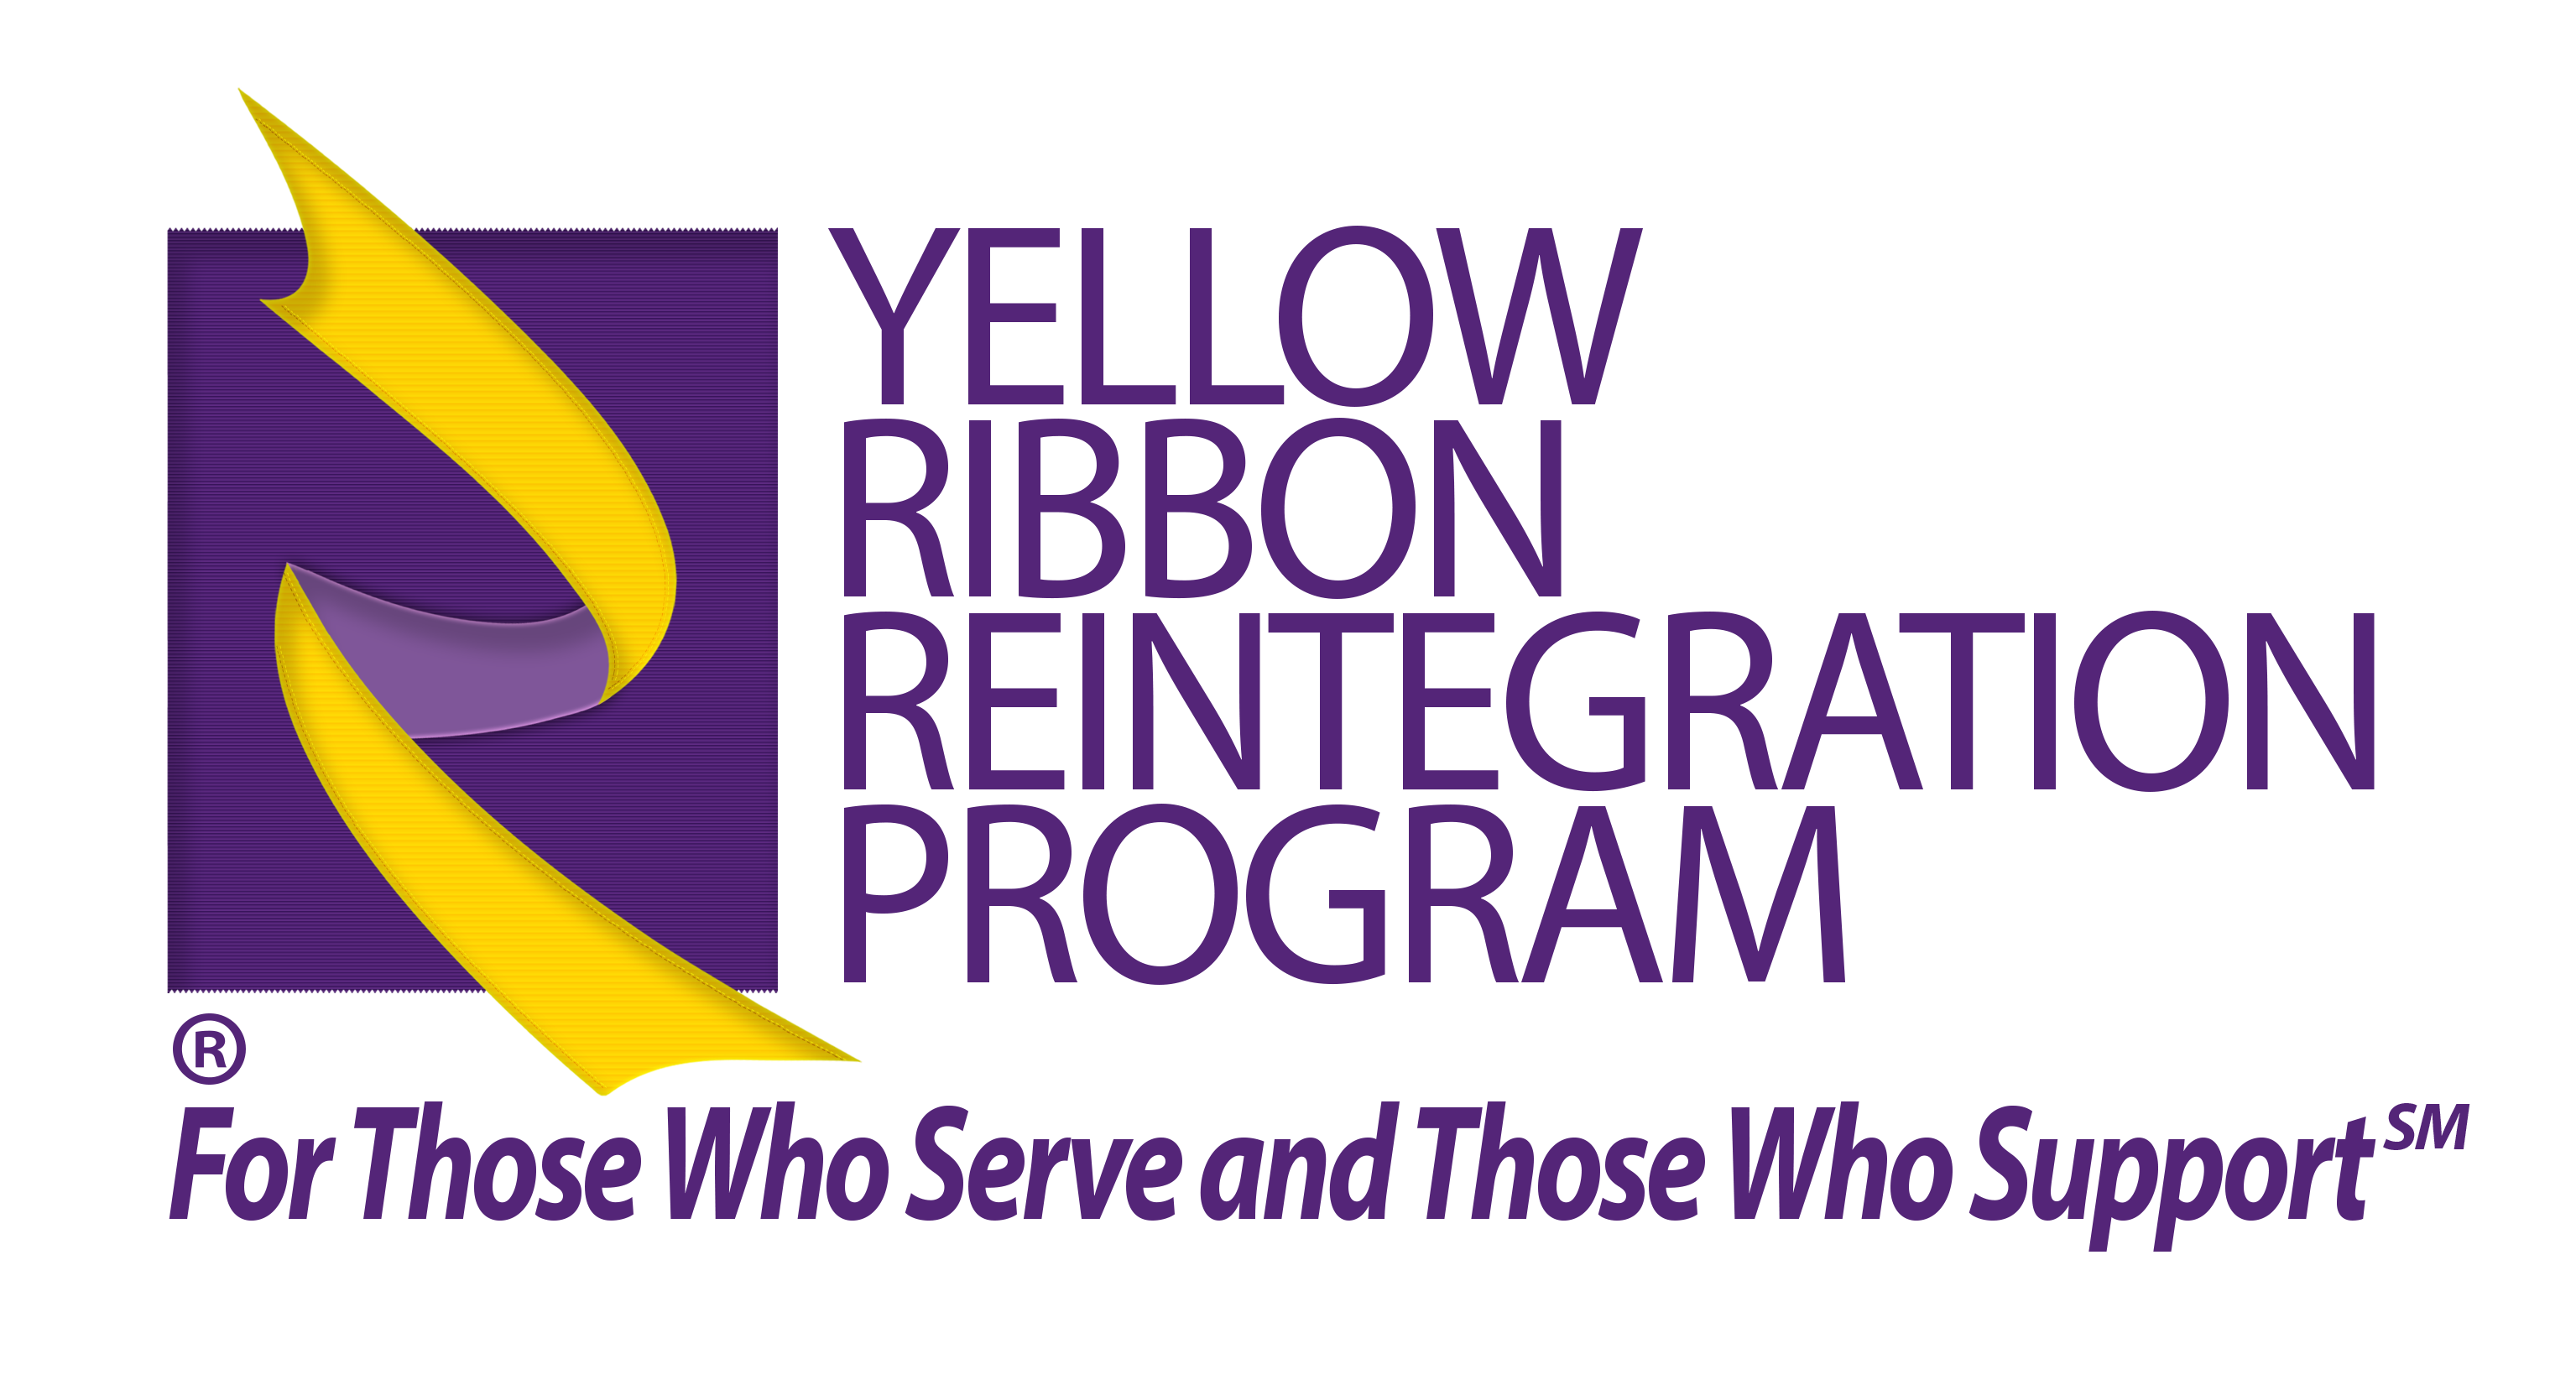 The logo for the Yellow Ribbon Integration Program.